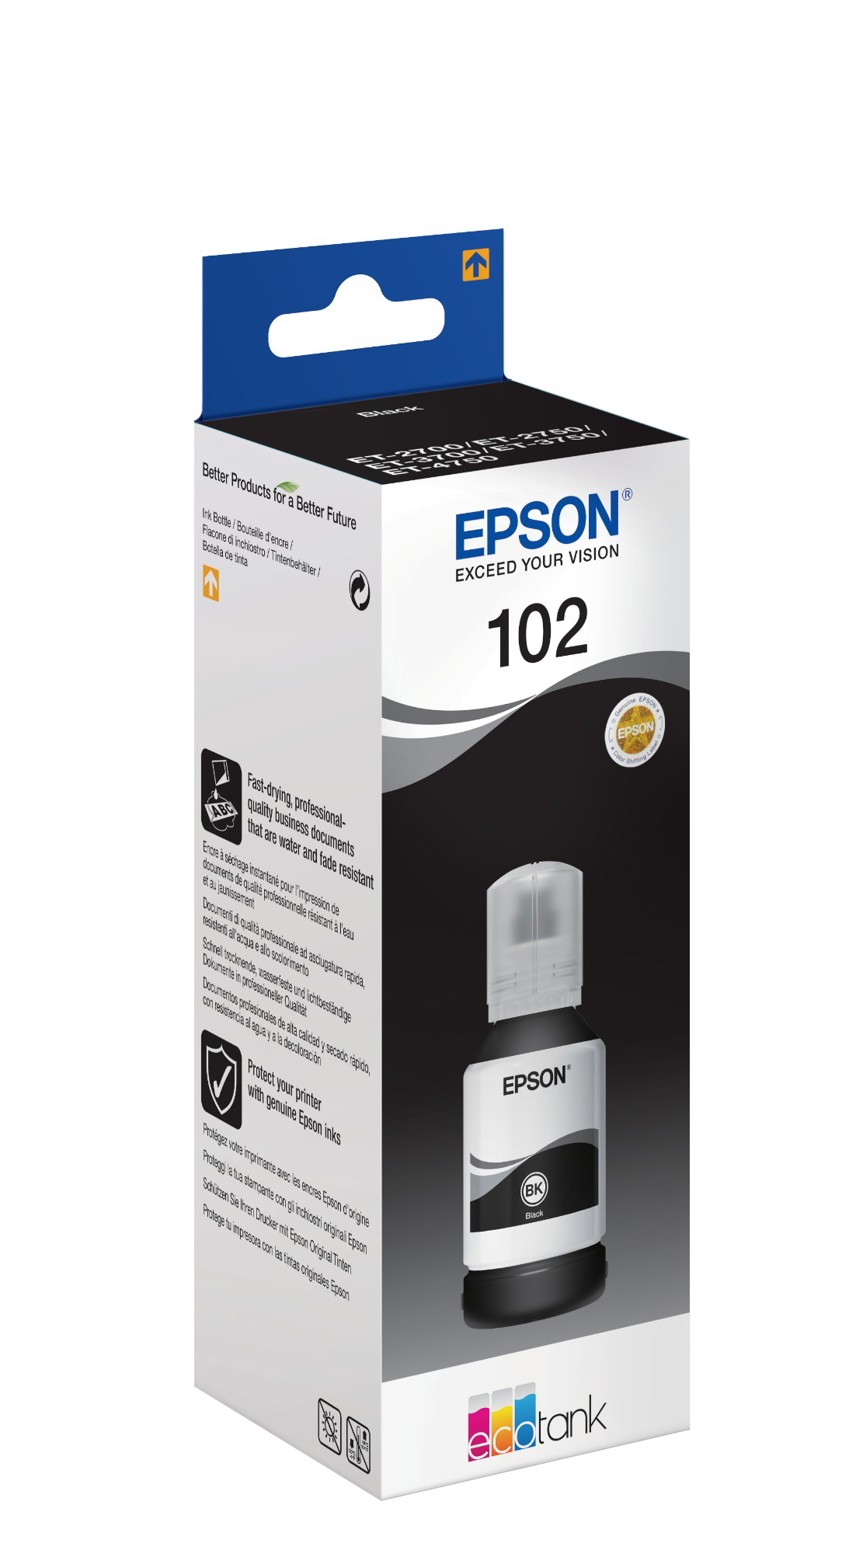 Epson C13T03R140/102 Ink bottle black, 7.5K pages 127ml for Epson ET-3700